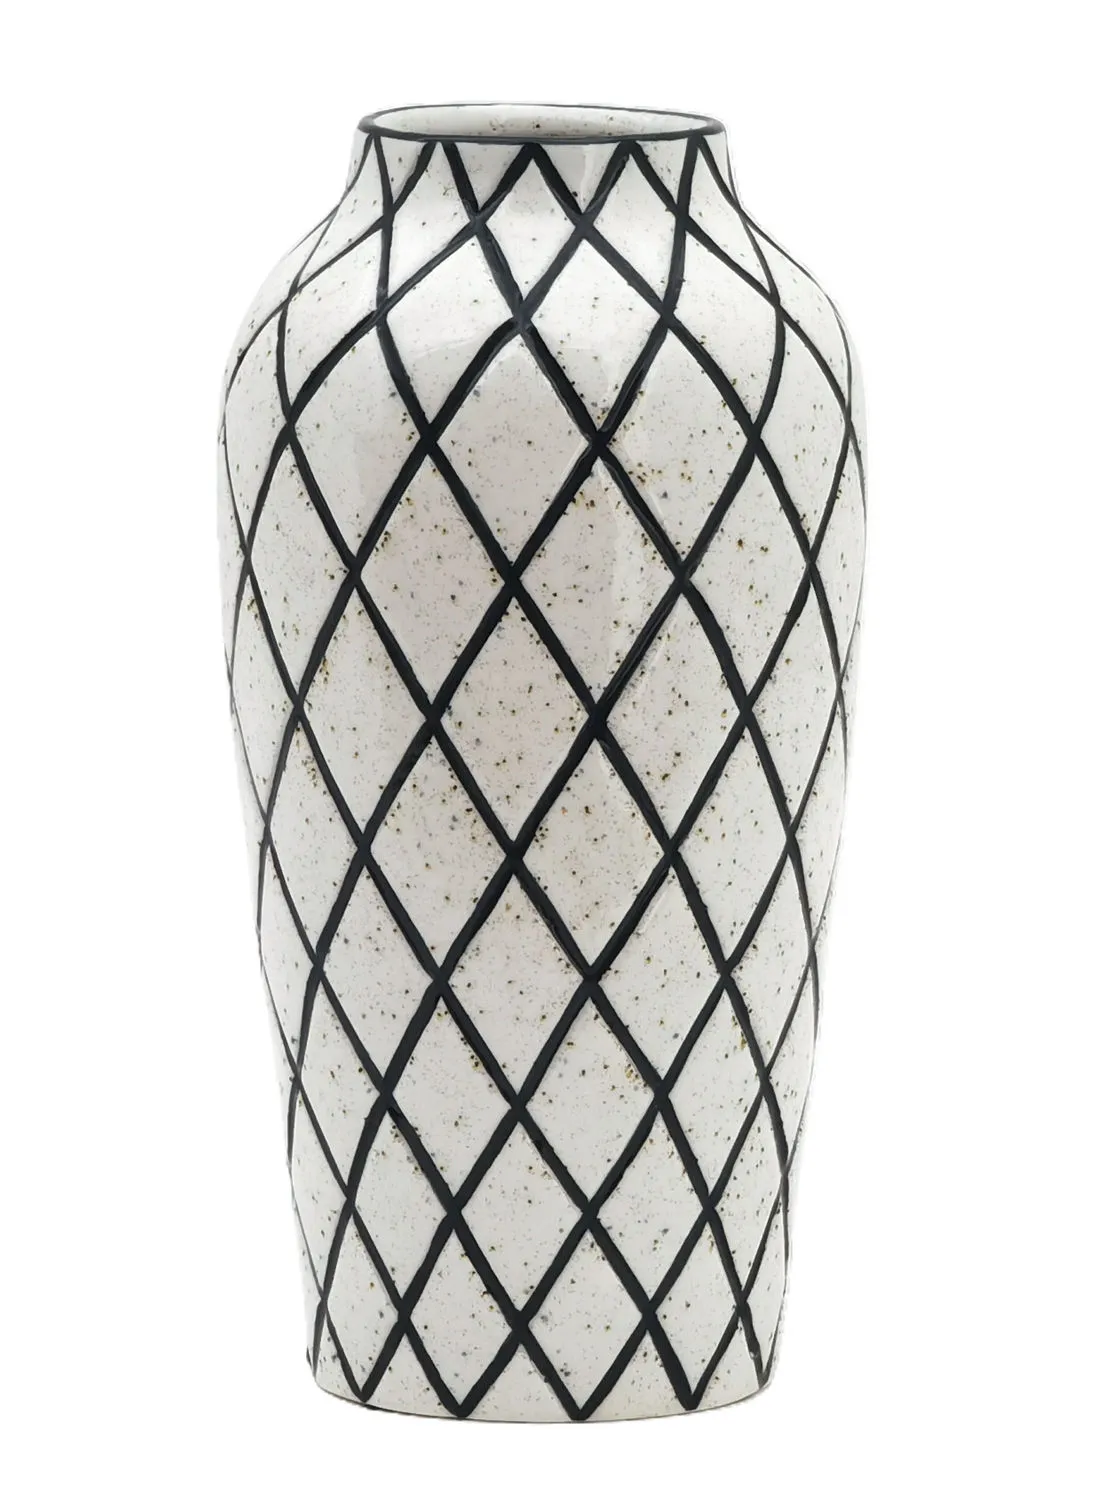 ebb & flow Elegant Design Ceramic Vase Unique Luxury Quality Material For The Perfect Stylish Home N13-149 White/Green 15.4 x 30cm